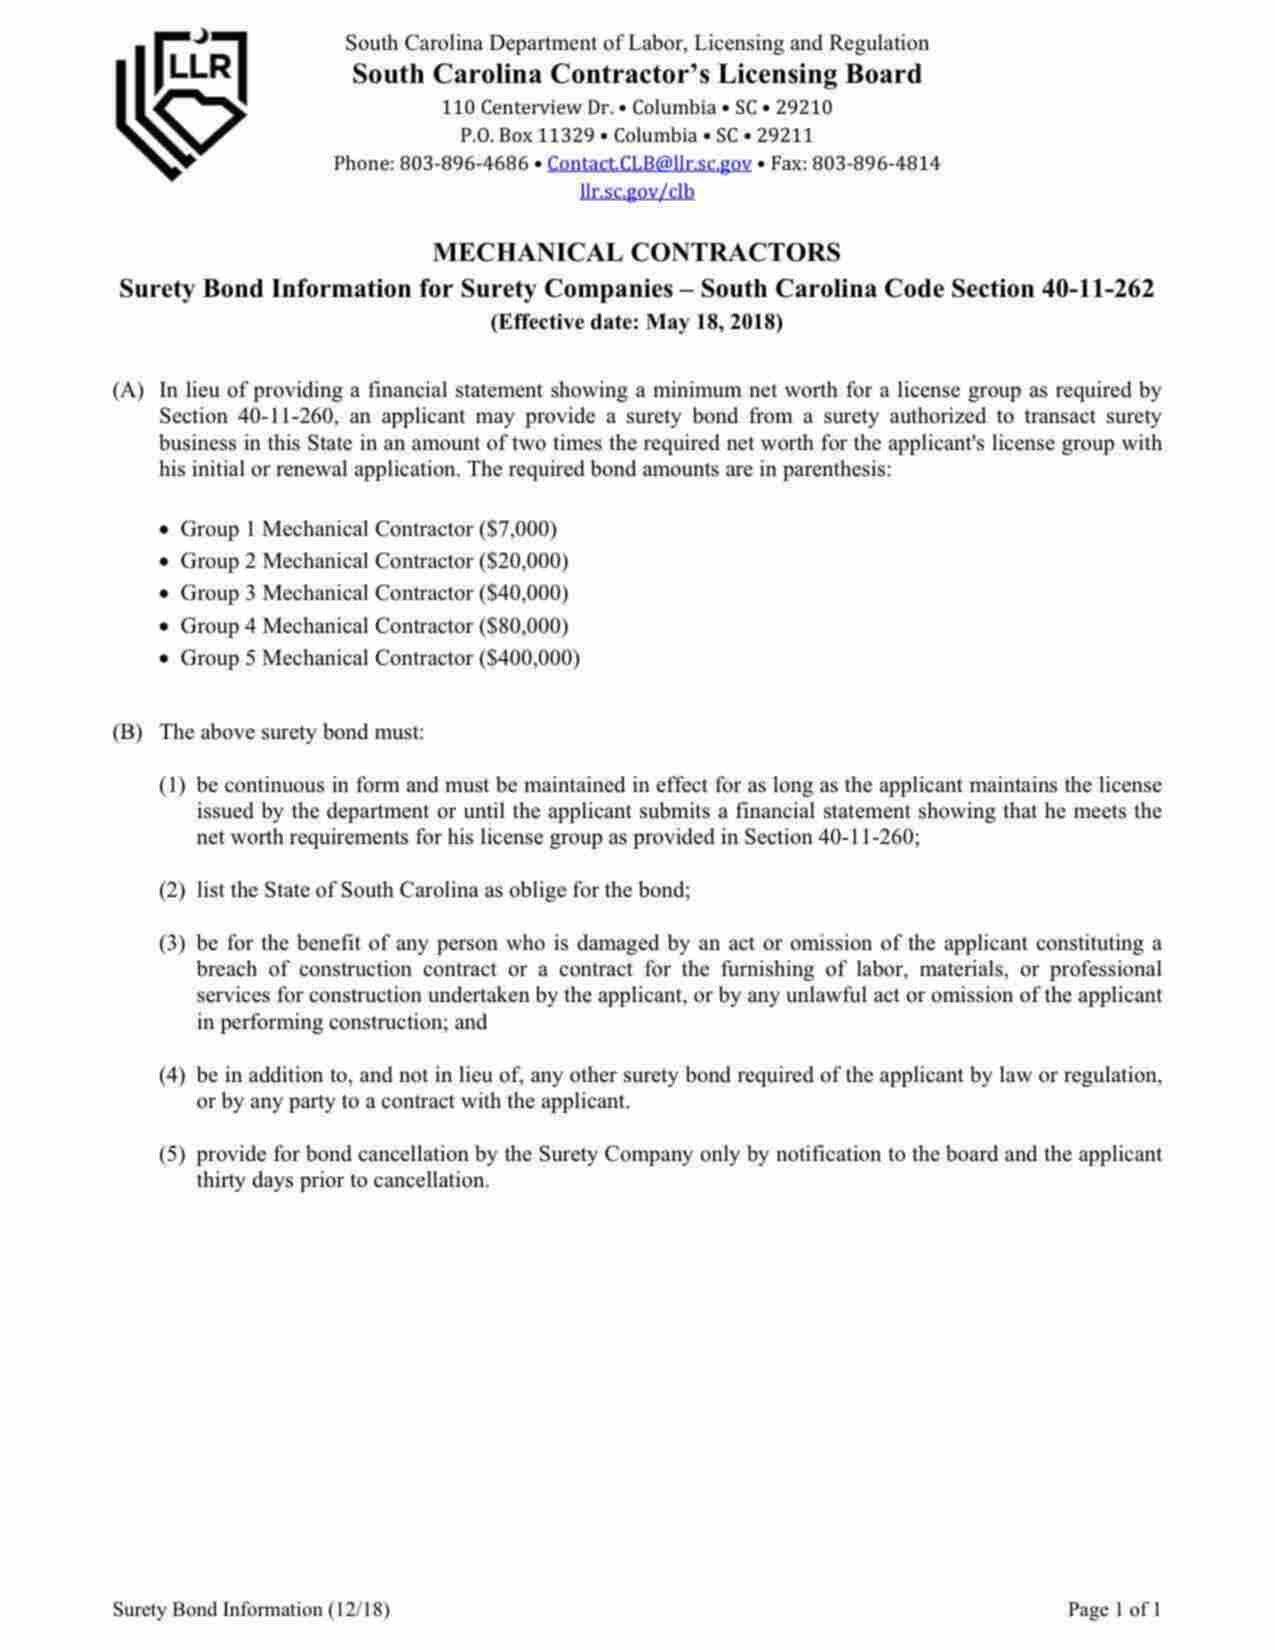 South Carolina Mechanical Contractor (Group 4) Bond Form